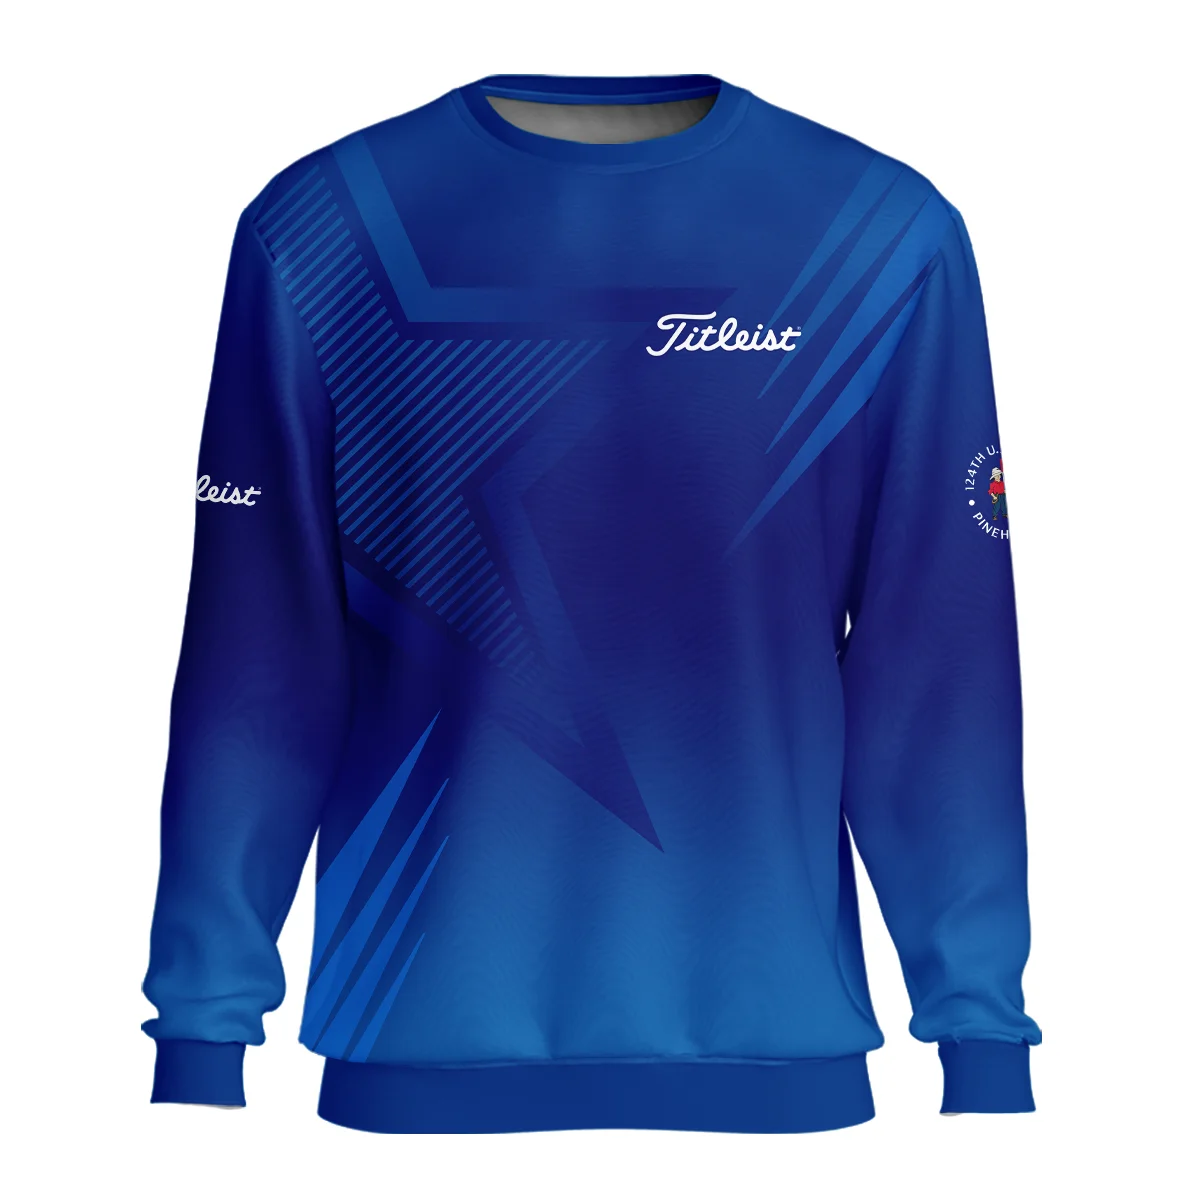 124th U.S. Open Pinehurst No.2 Sleeveless Jacket Dark Blue Gradient Star Pattern Sleeveless Jacket